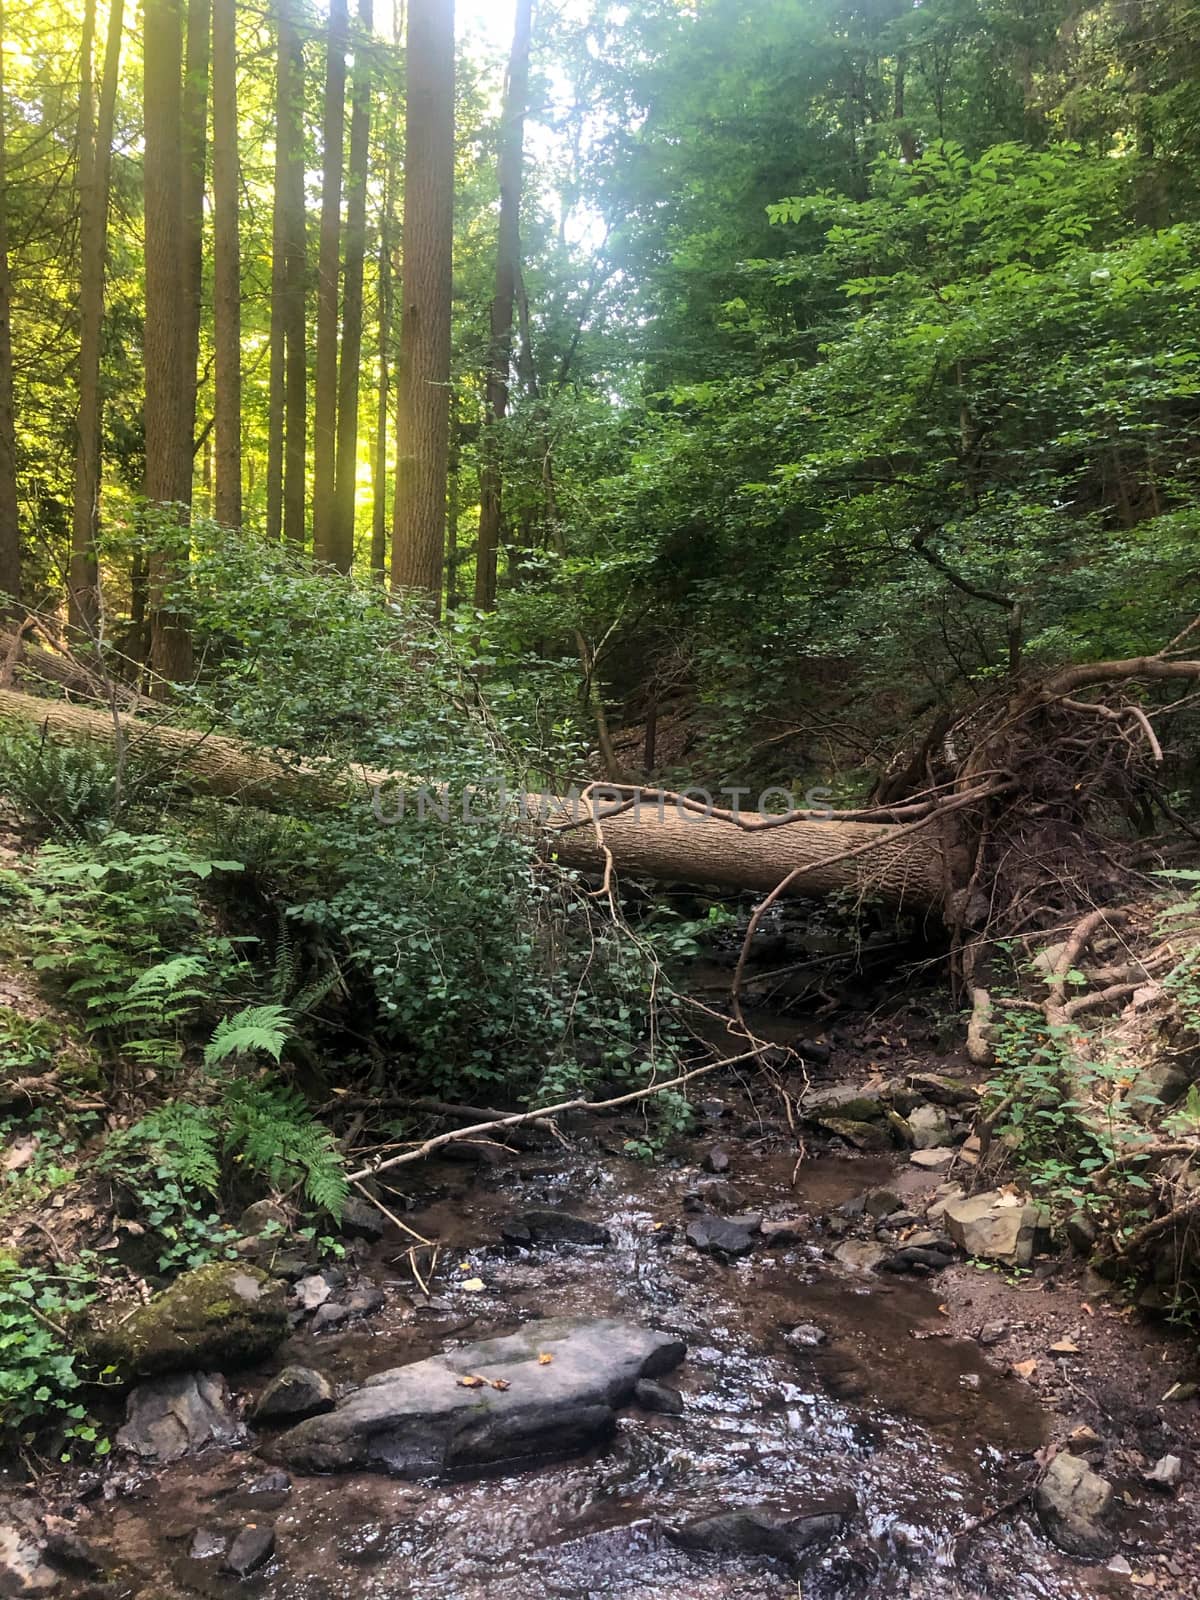 Fallen tree over forest stream by marysalen